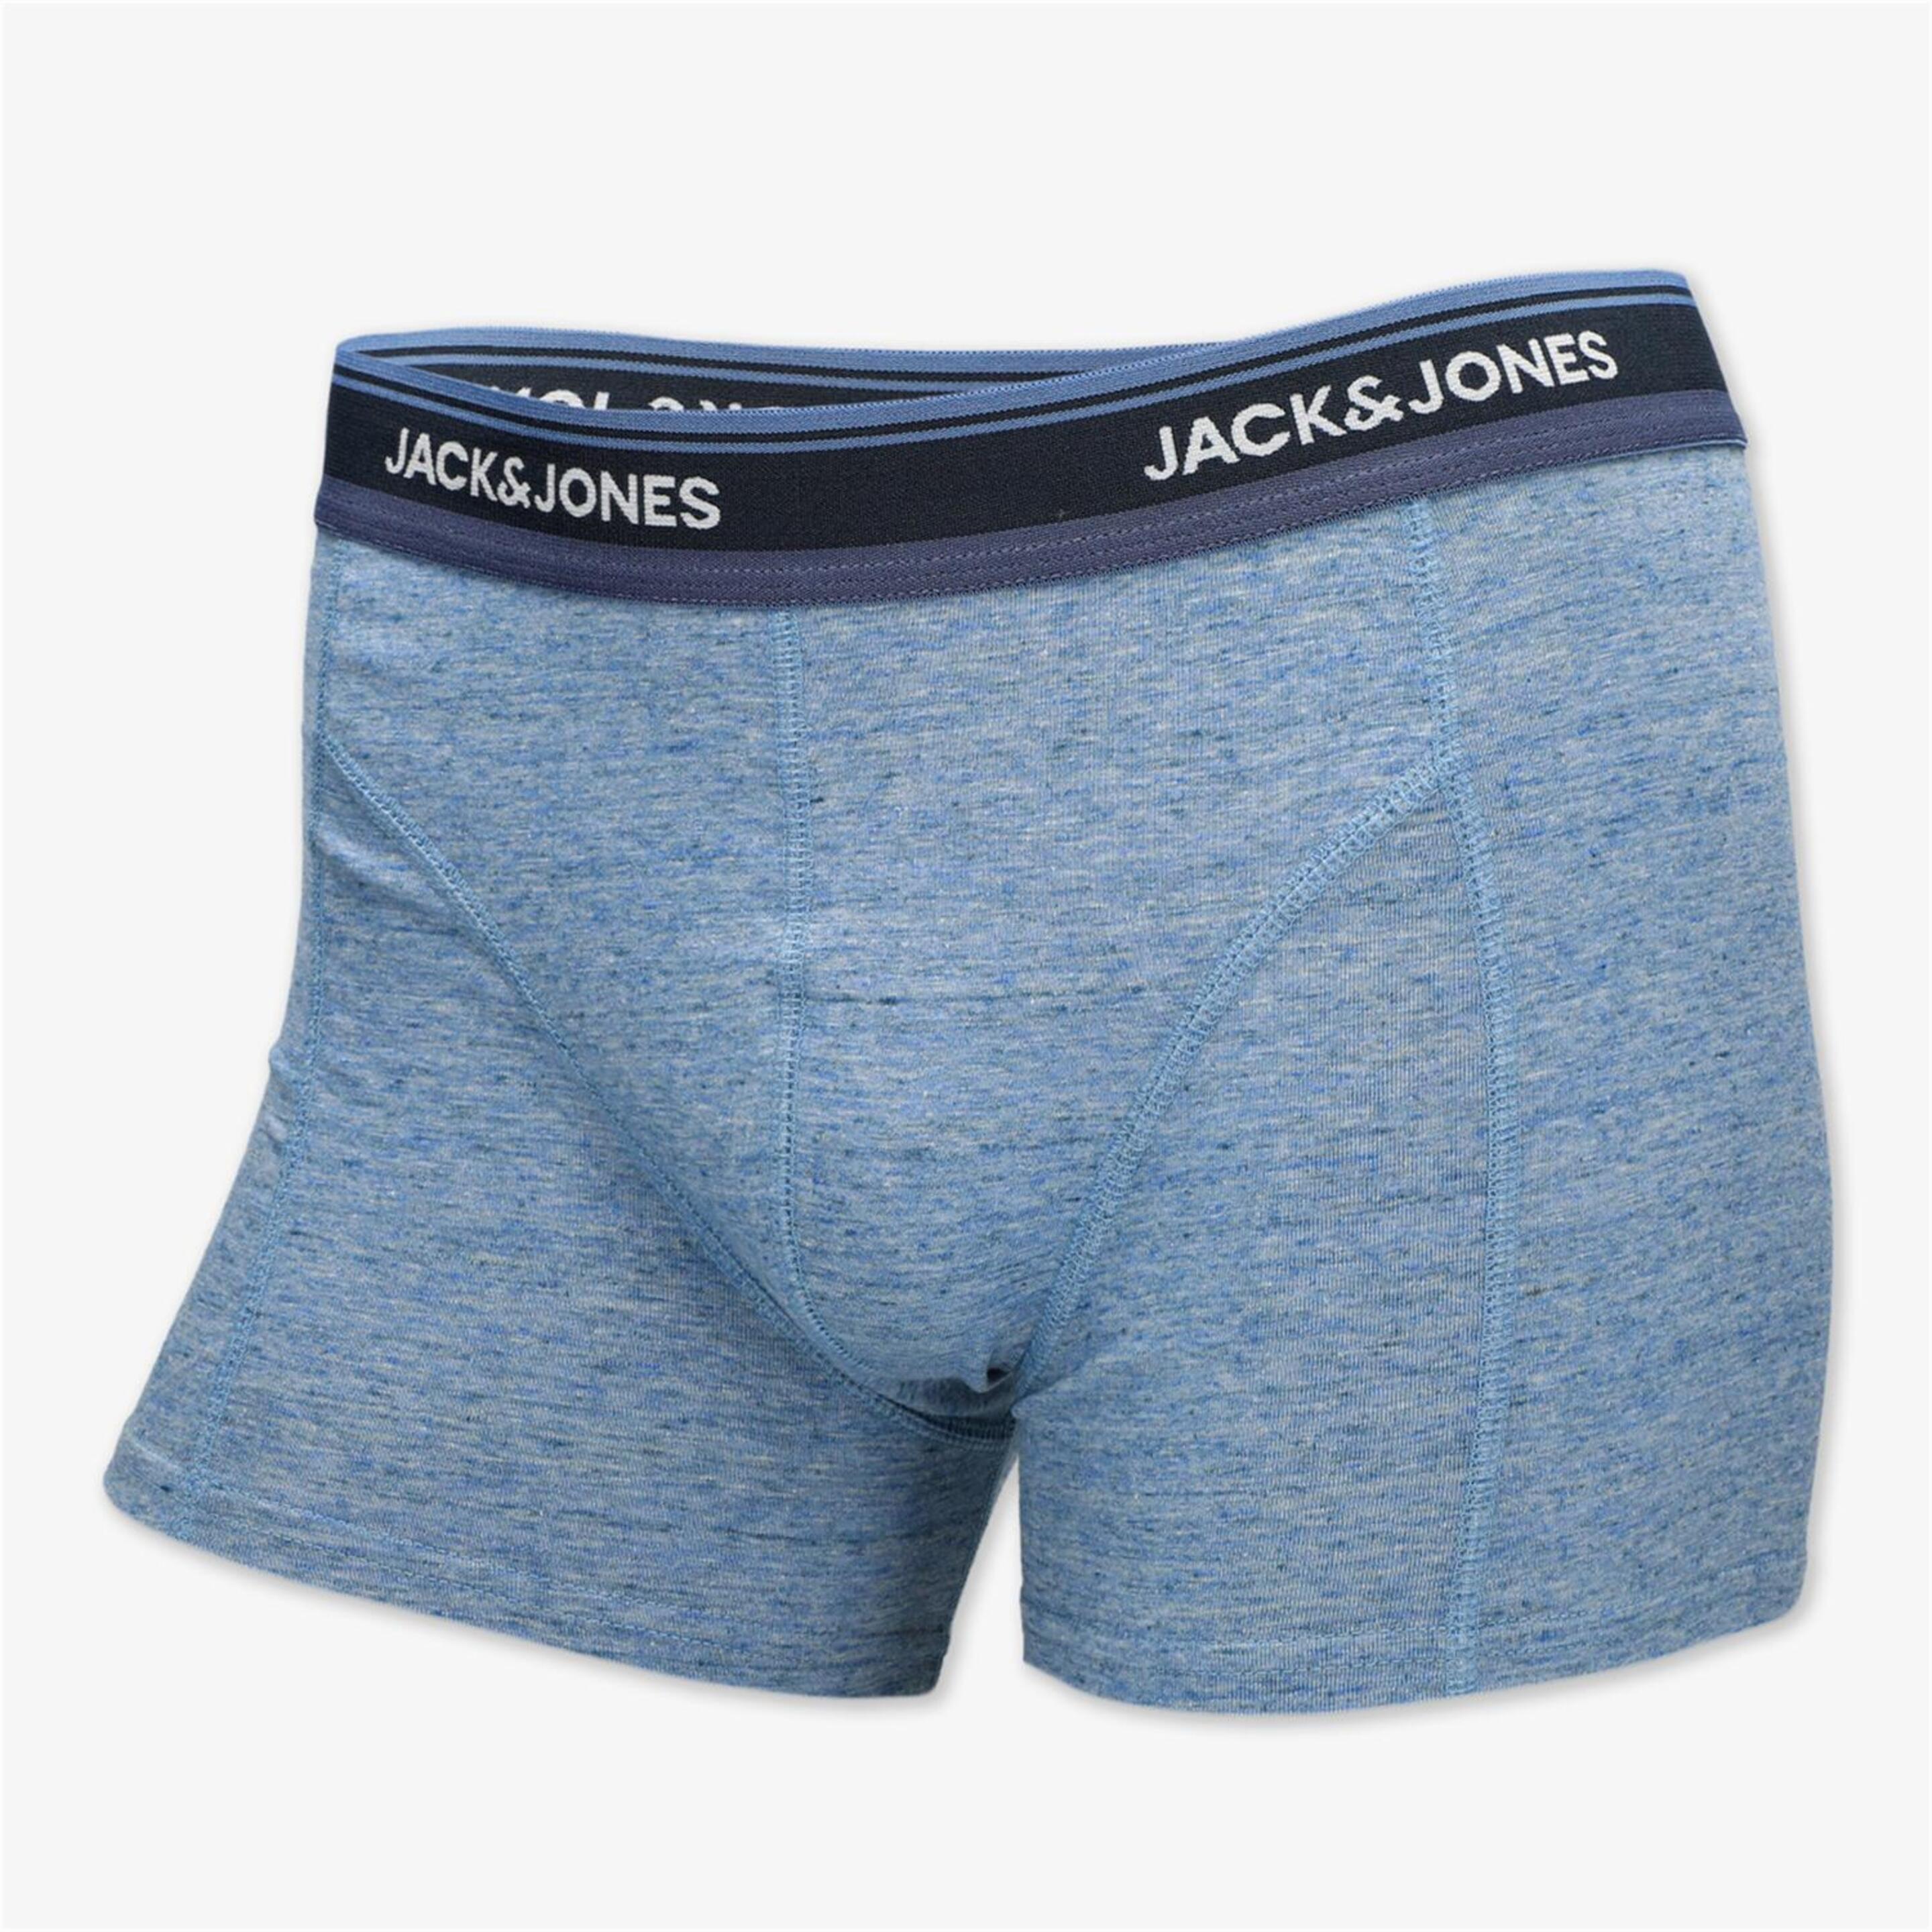 Jack & Jones Jacwells - Azul - Calzoncillos Bóxer